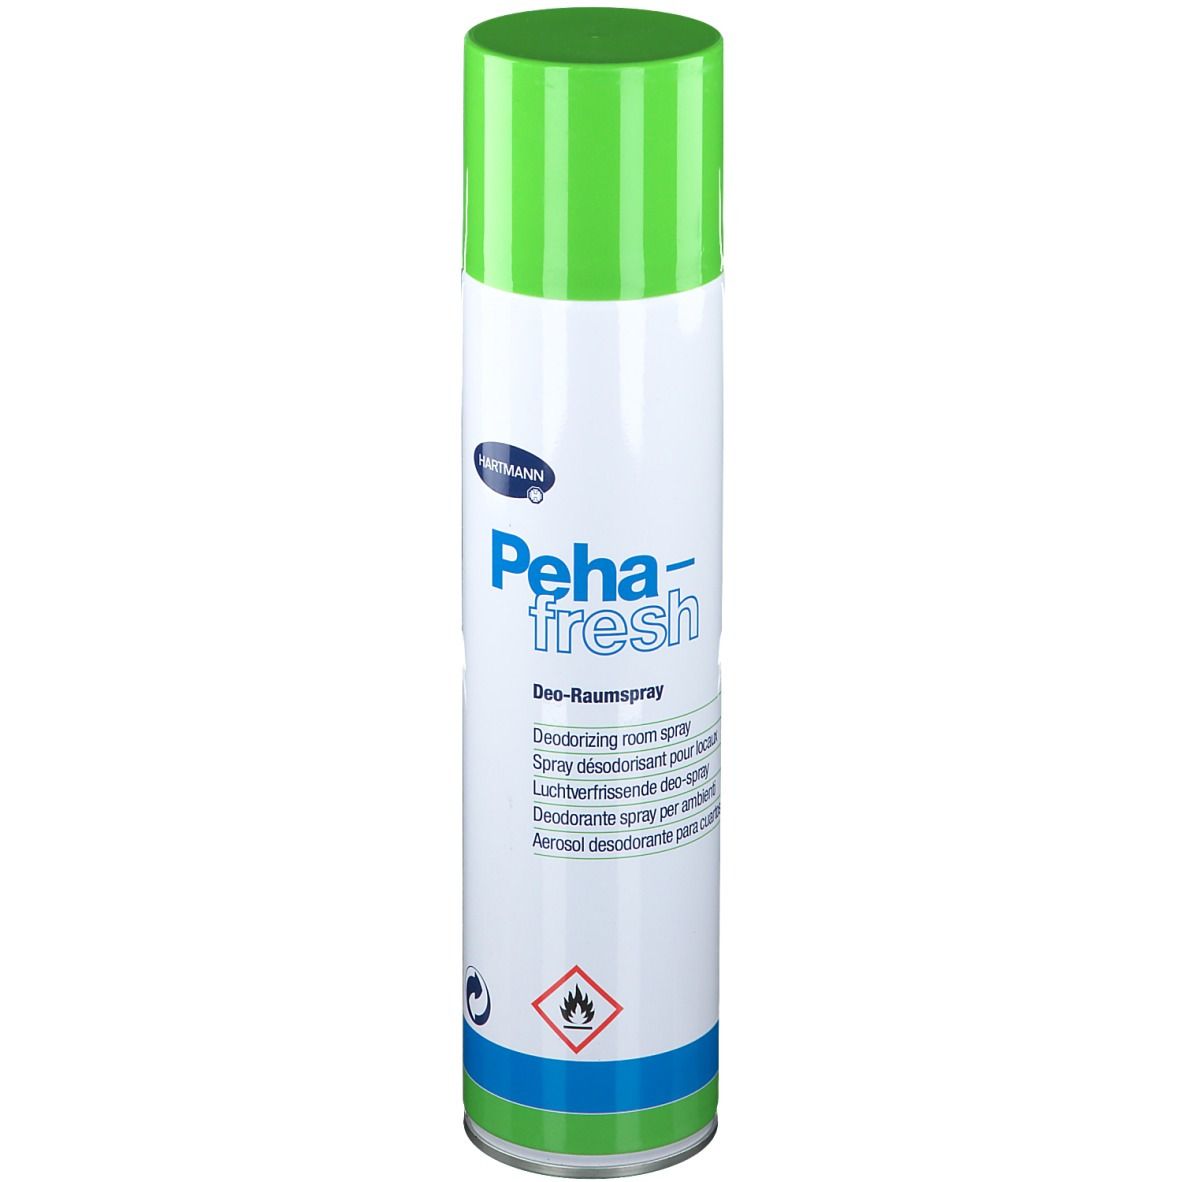 Peha-fresh geruchsbindender Deo-Raumspray